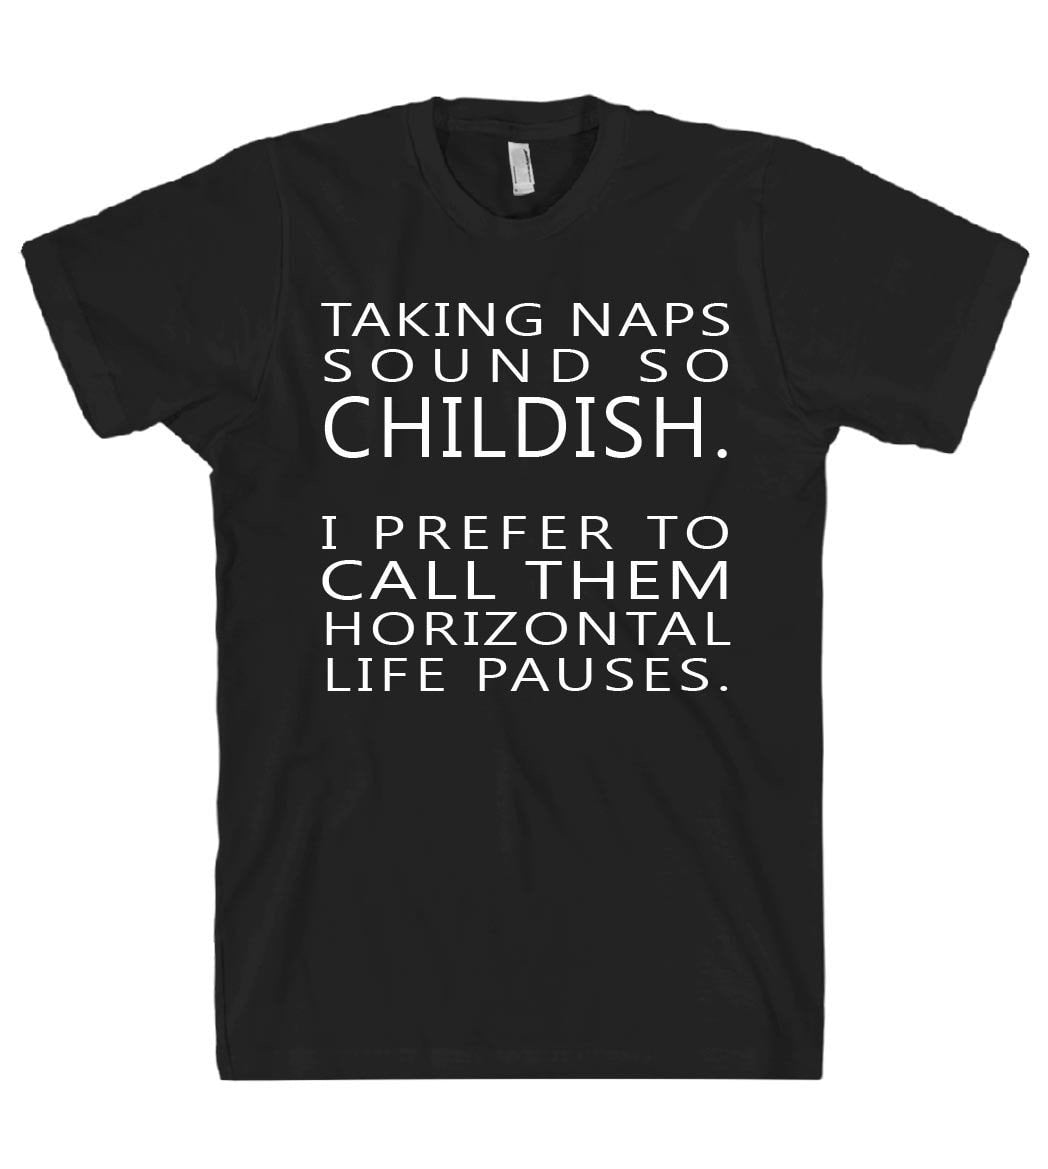 taking naps sounds so childish tshirt - Shirtoopia